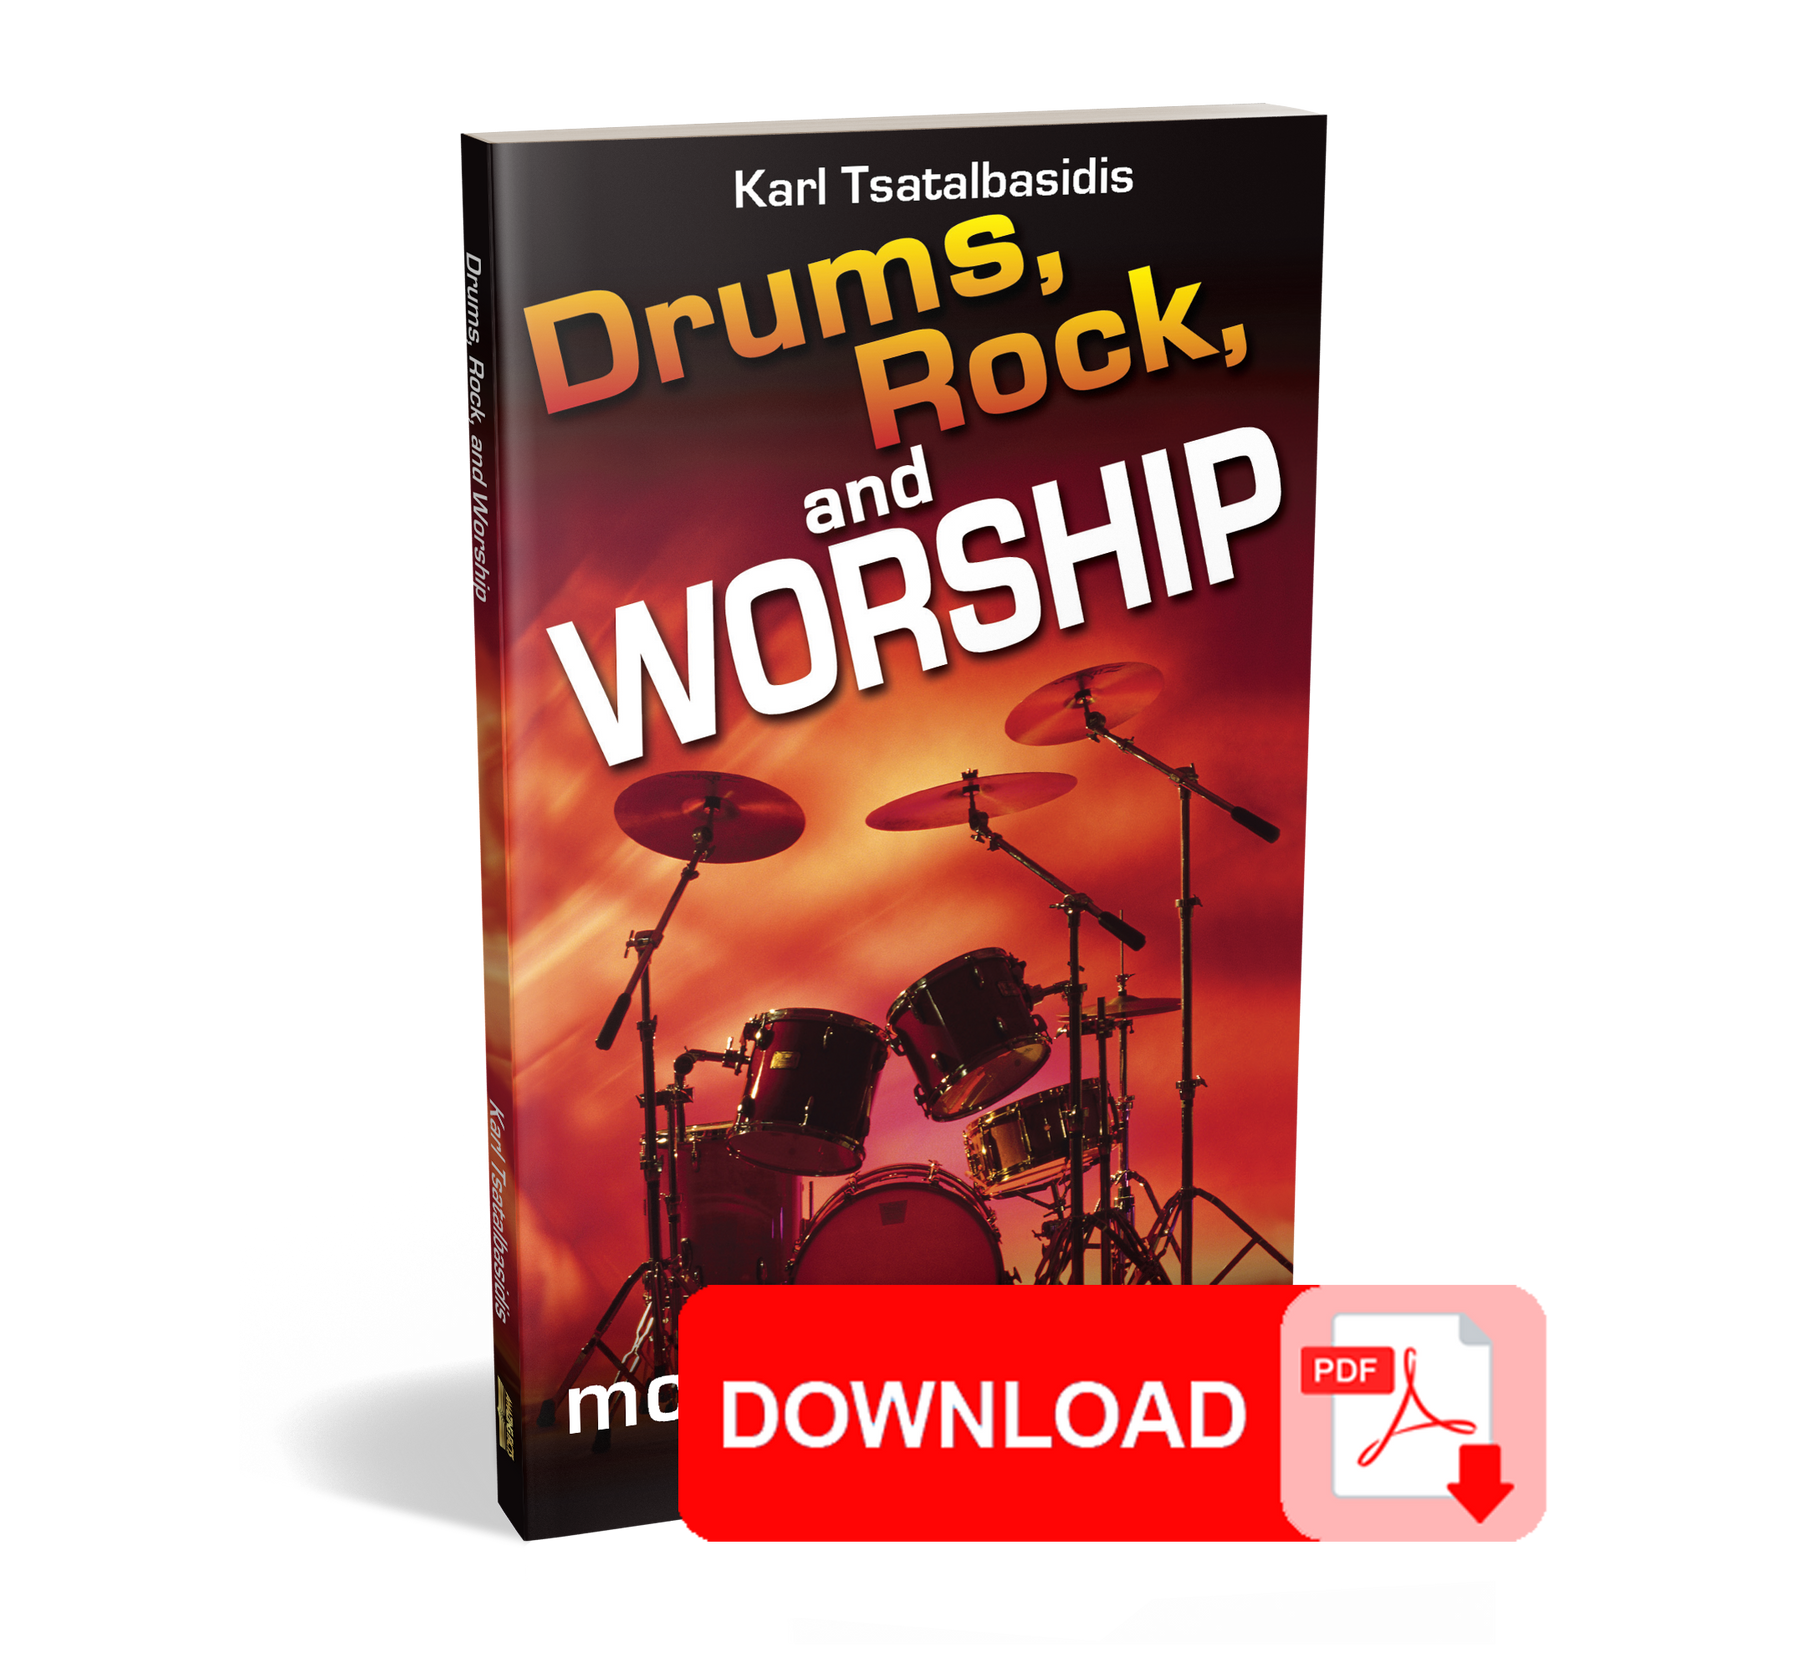 (PDF Download) Drums, Rock, and Worship by Karl Tsatalbasidis